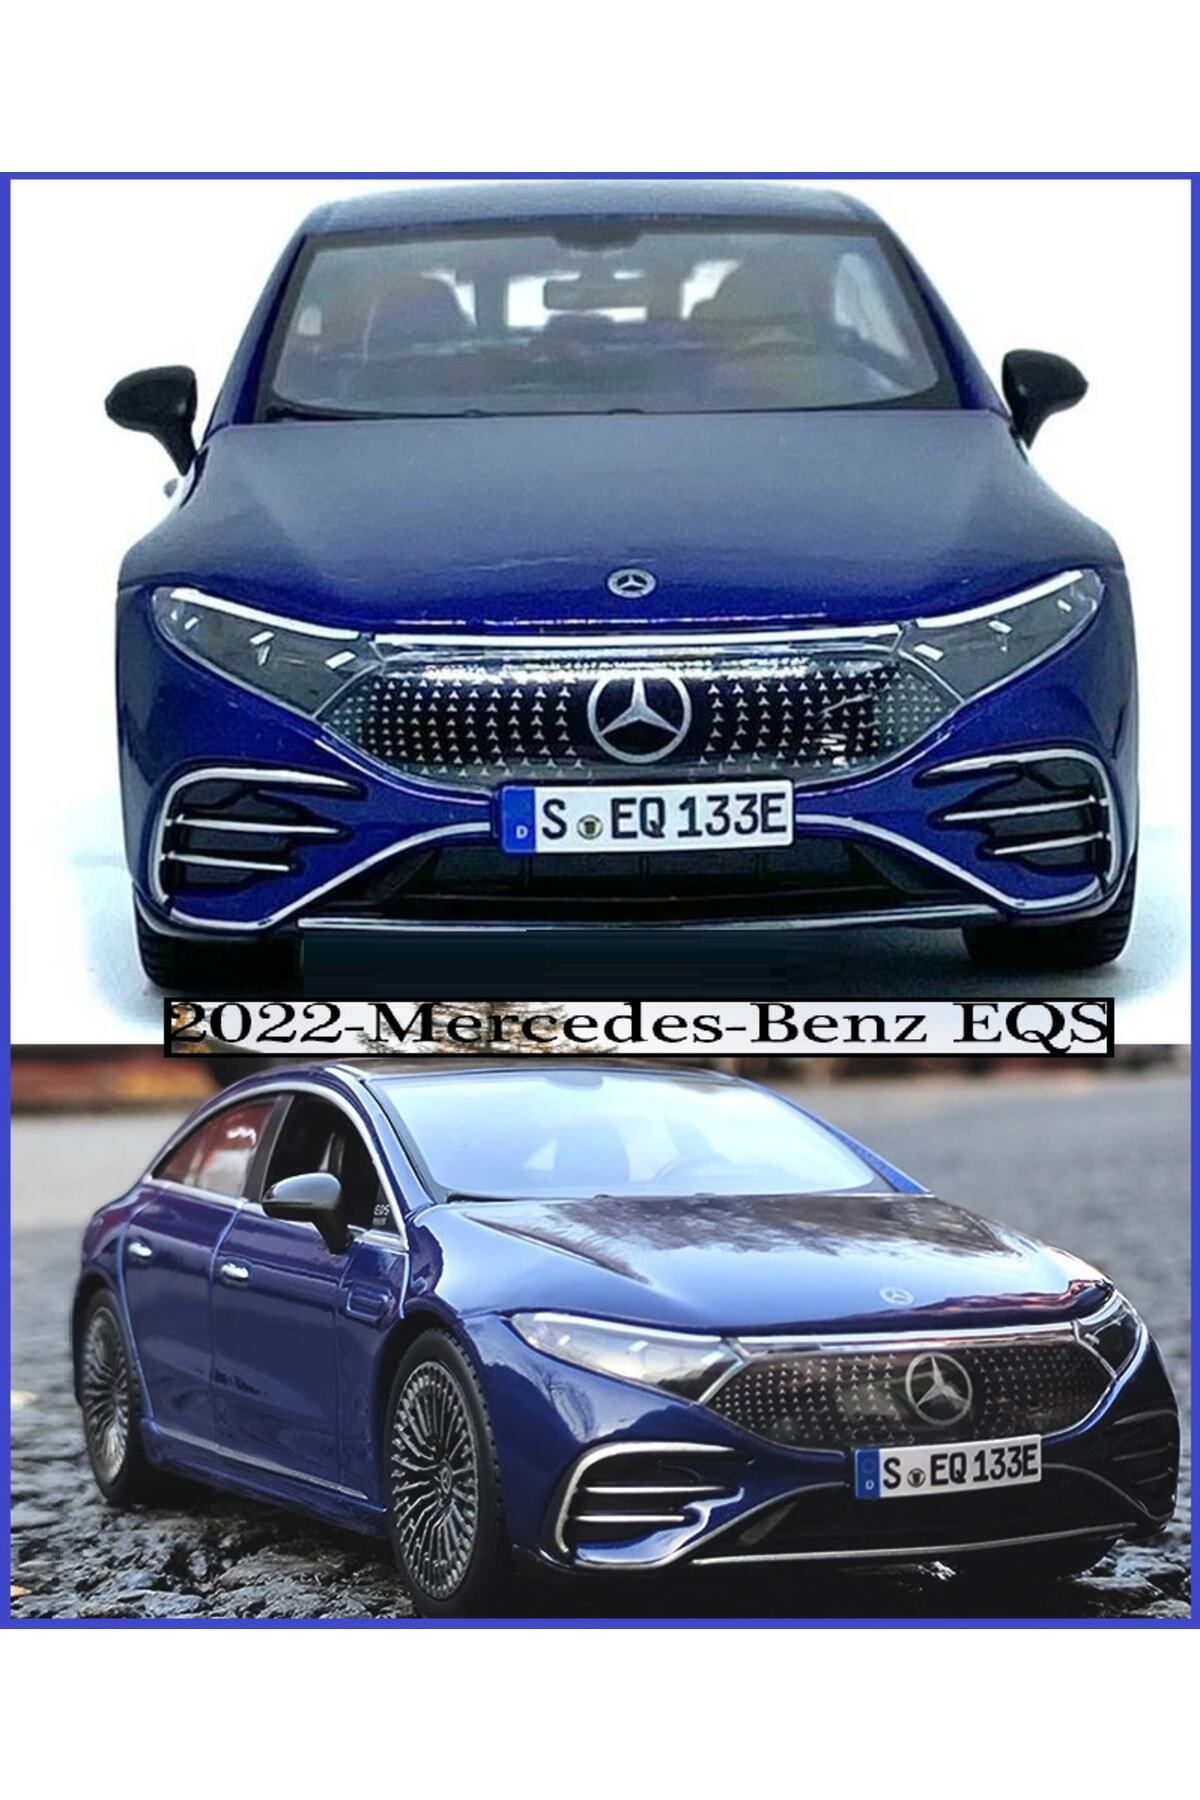 OYUNCAKSAHİLİ Mercedes Benz Eqs 2022 Diecast Metal 1:27 Koleksiyon Orjinal Model Araba Kapılar Açılır